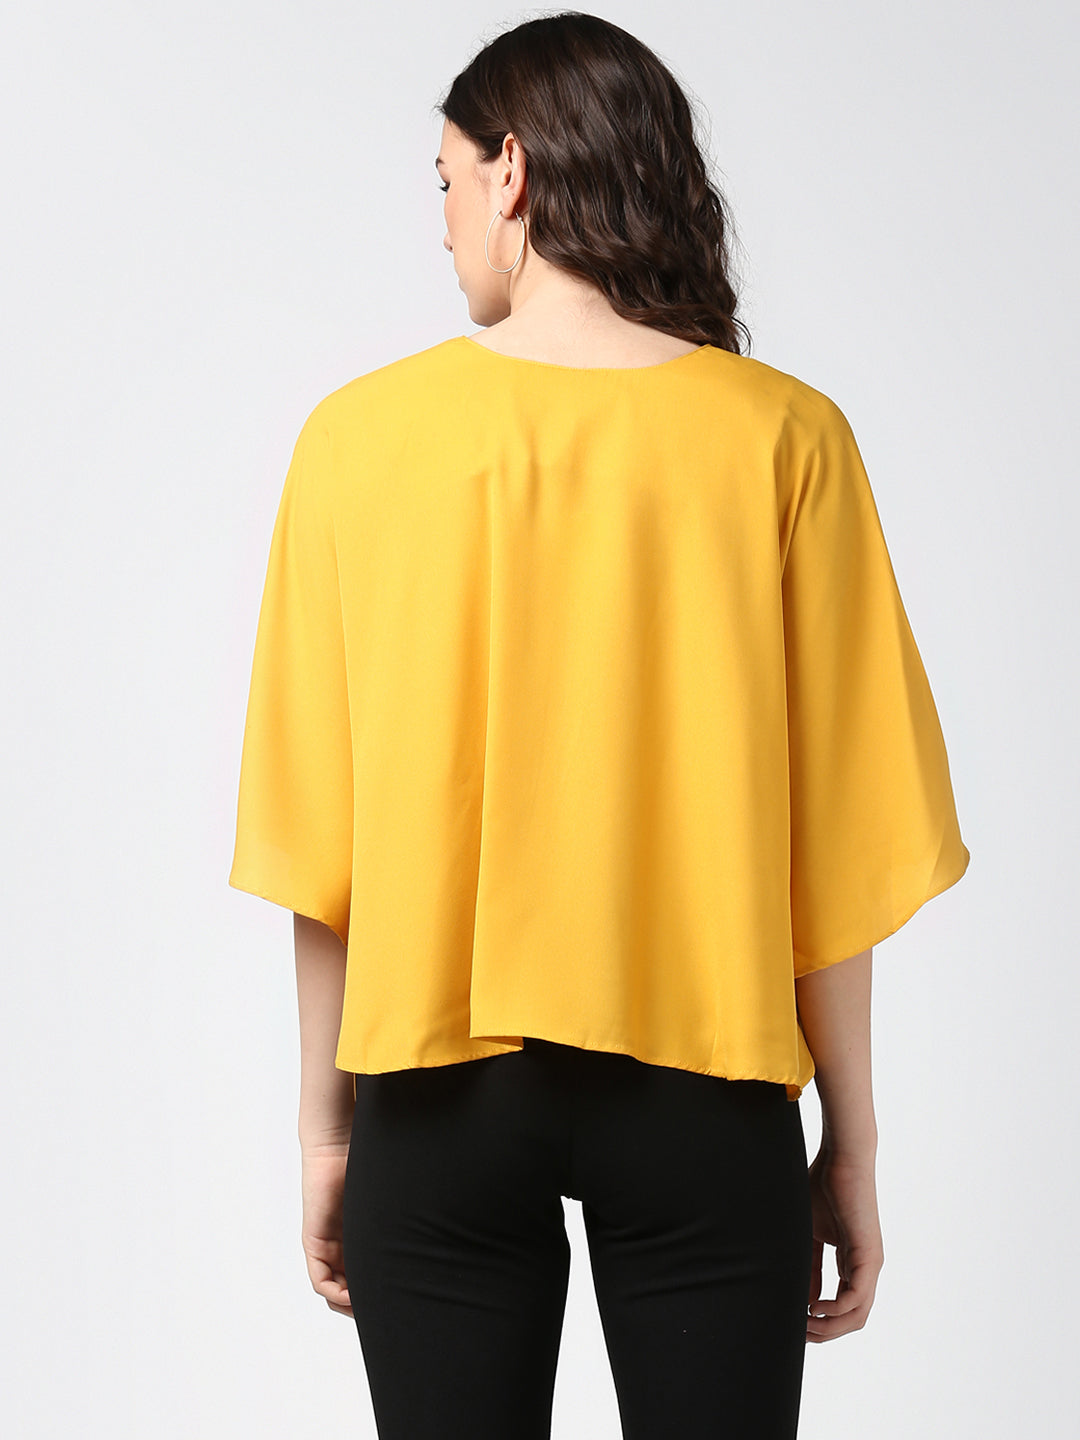 Women's Yellow Side Drape Top with Brooch